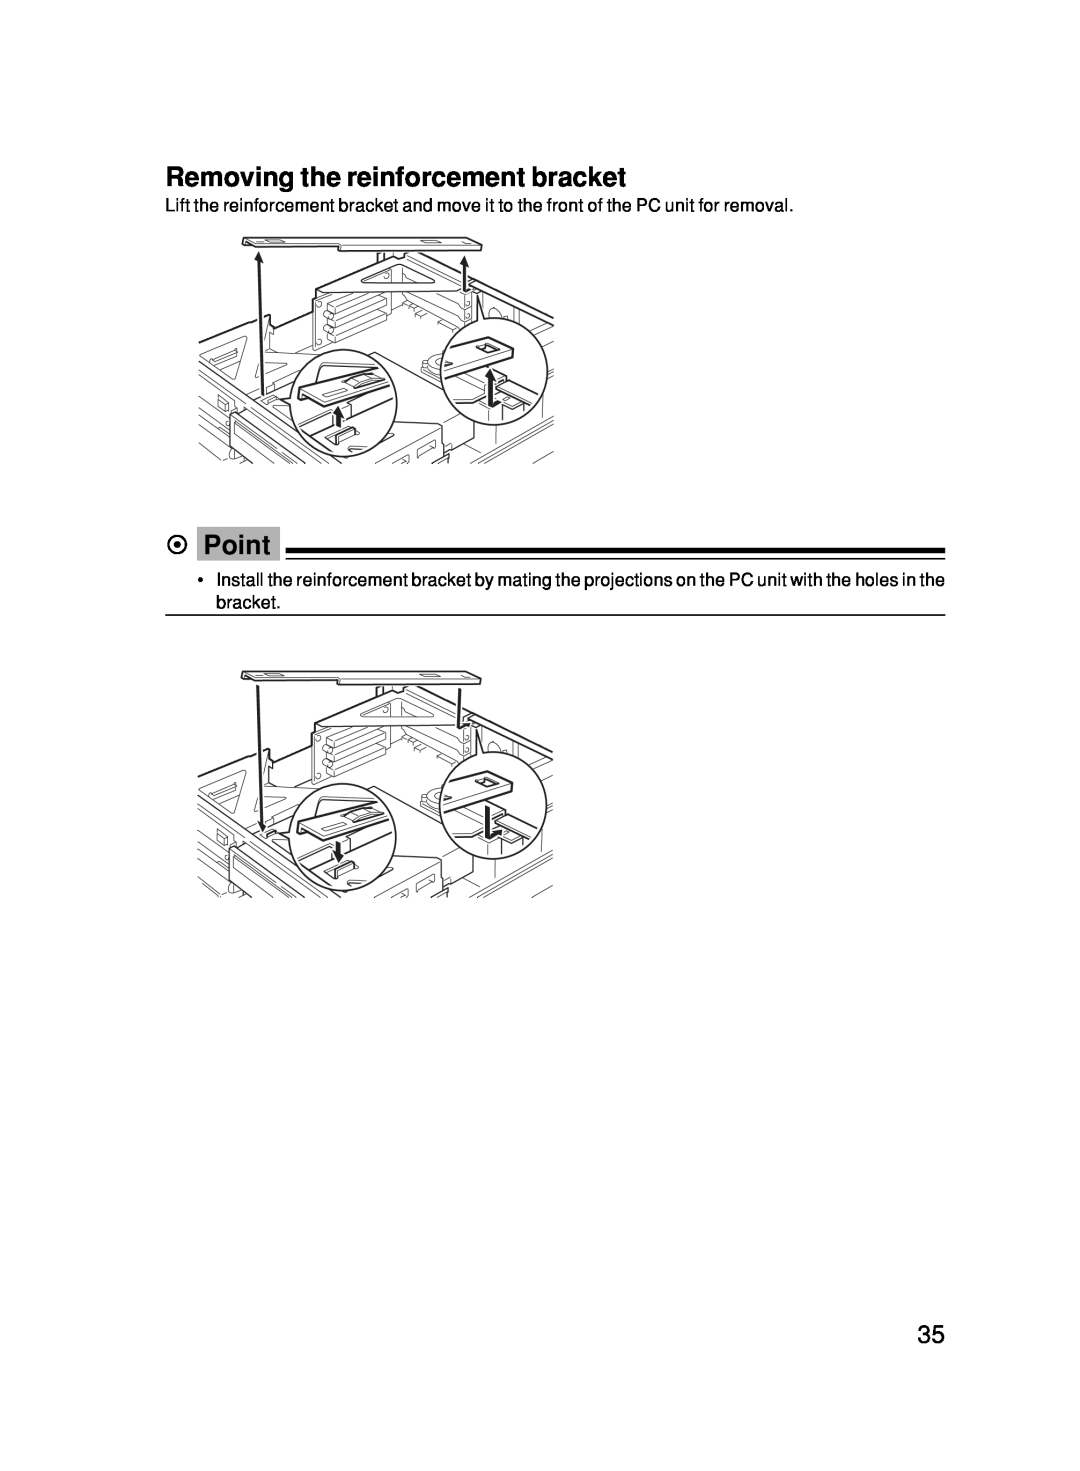 Fujitsu 500 user manual Removing the reinforcement bracket, Point 